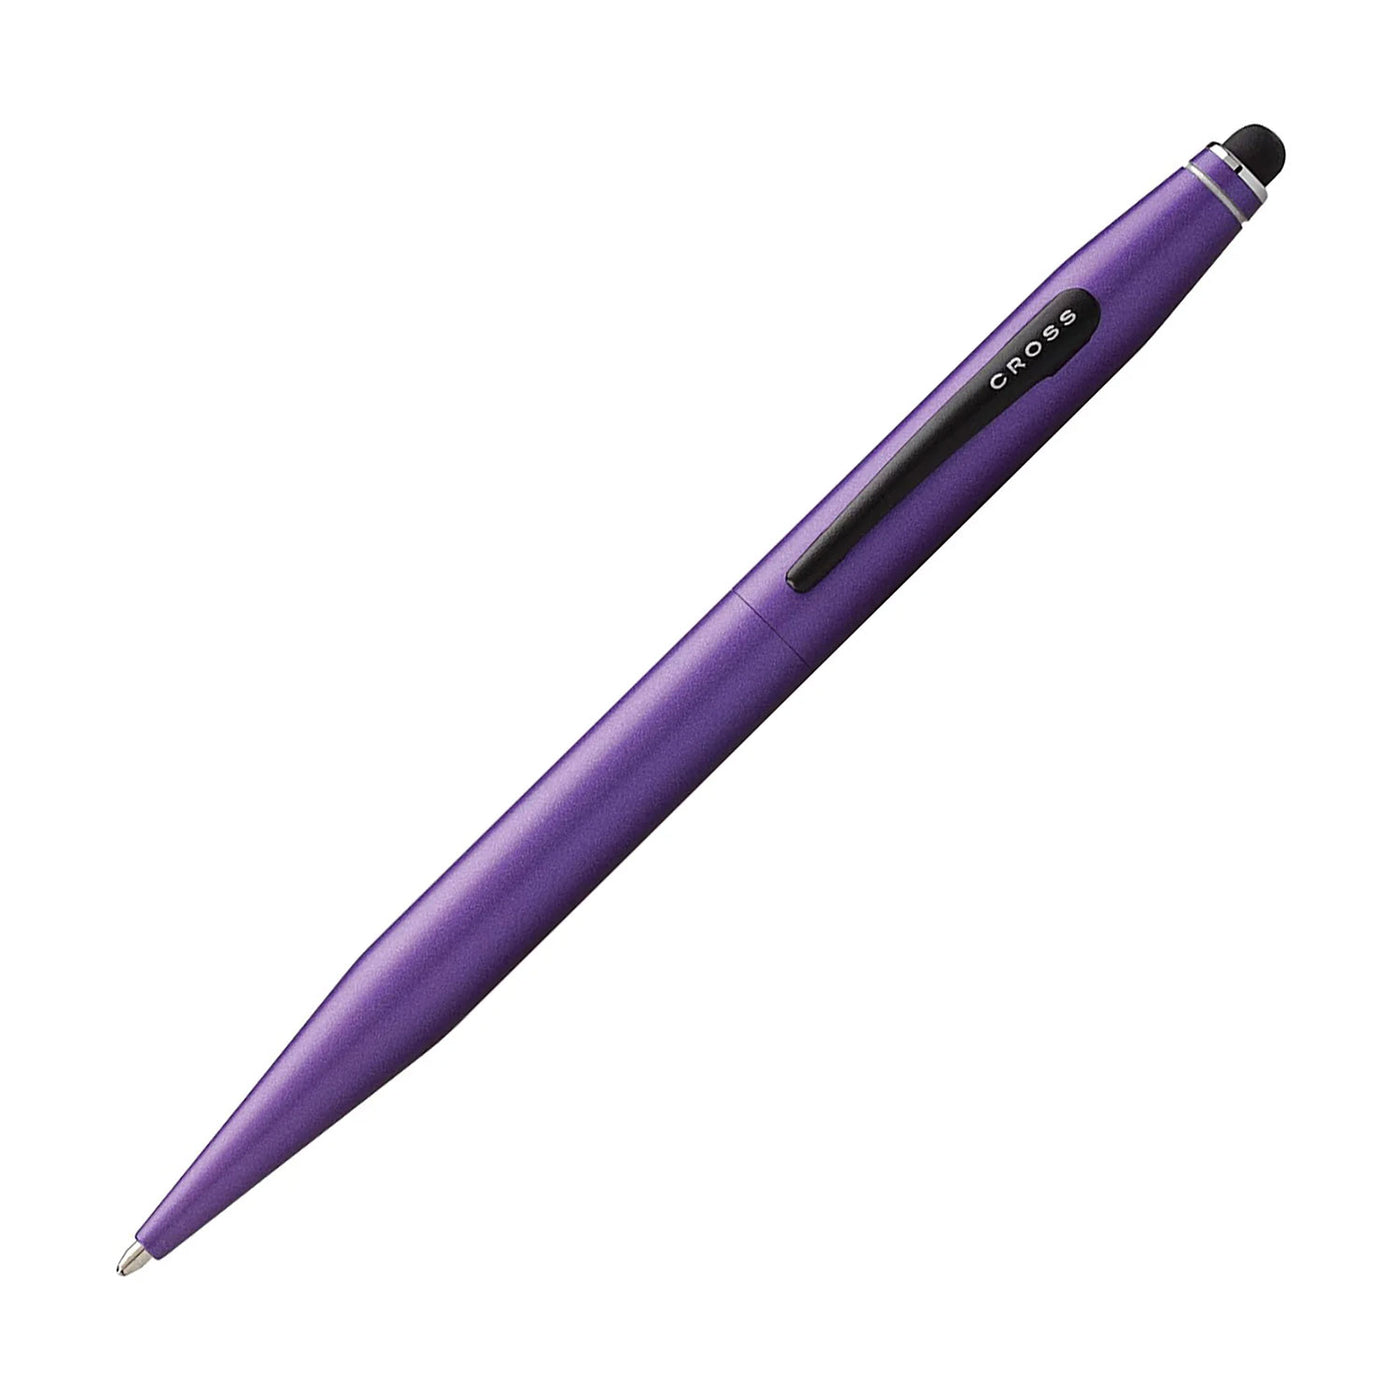 Cross Tech2 Multifunction Ball Pen with Stylus - Metallic Purple 1